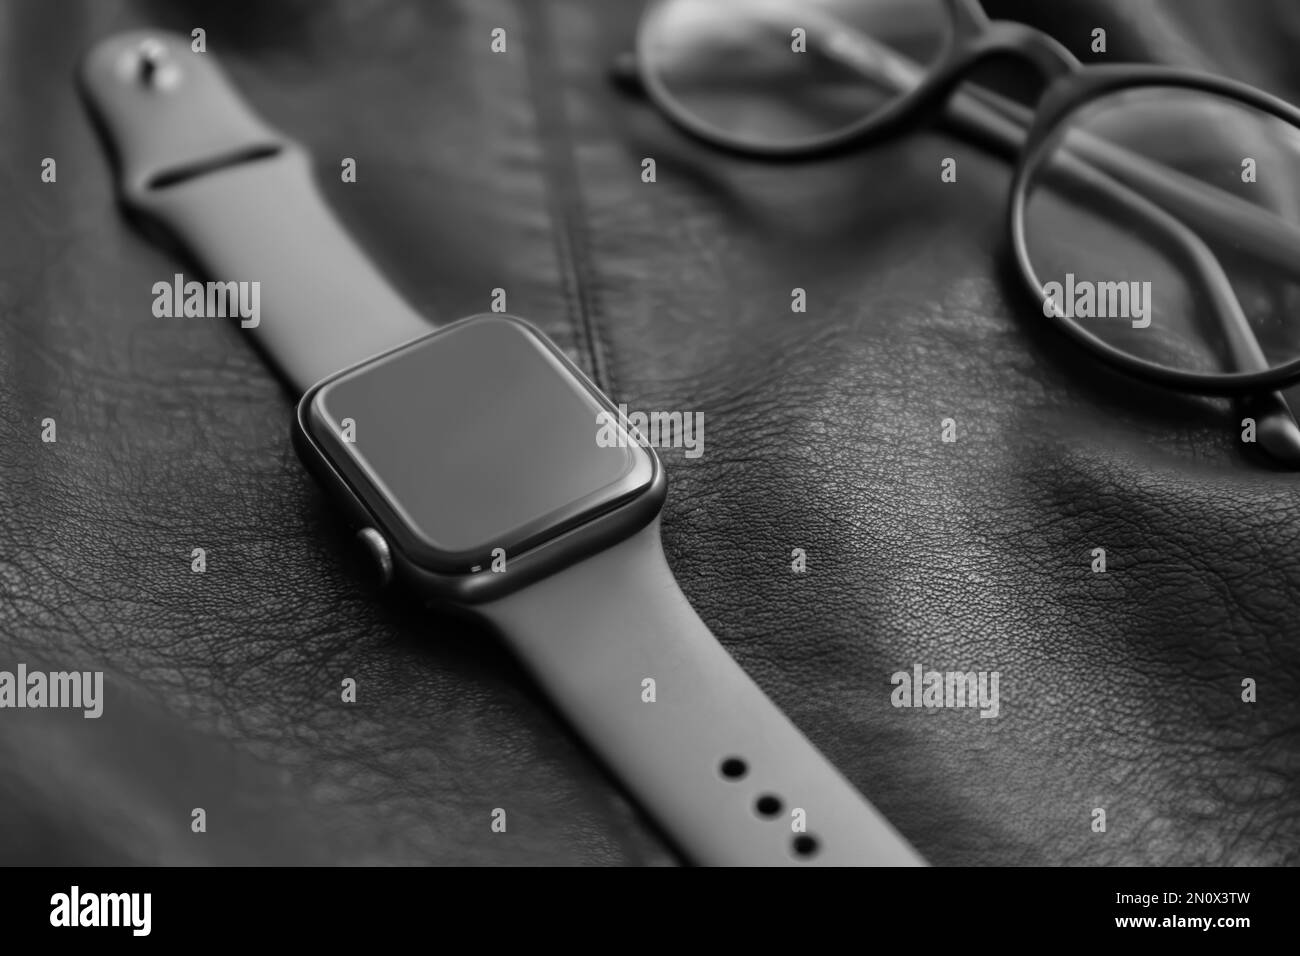 Stylish smart watch and glasses on black leather fabric, closeup Stock Photo